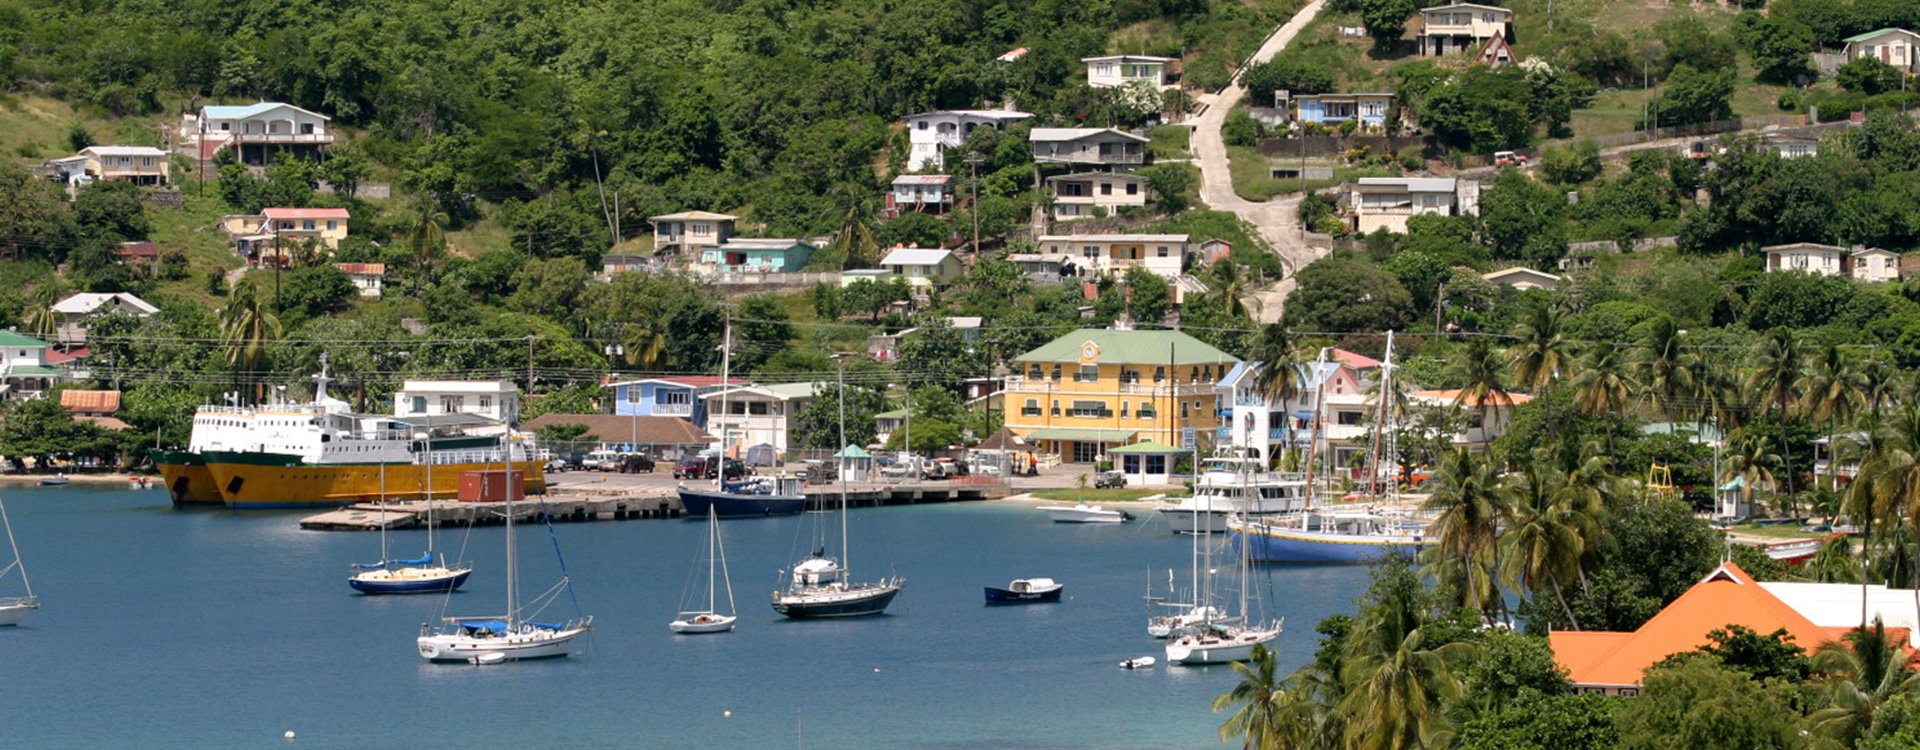 St Vincent & Grenadines_Admiralty Bay